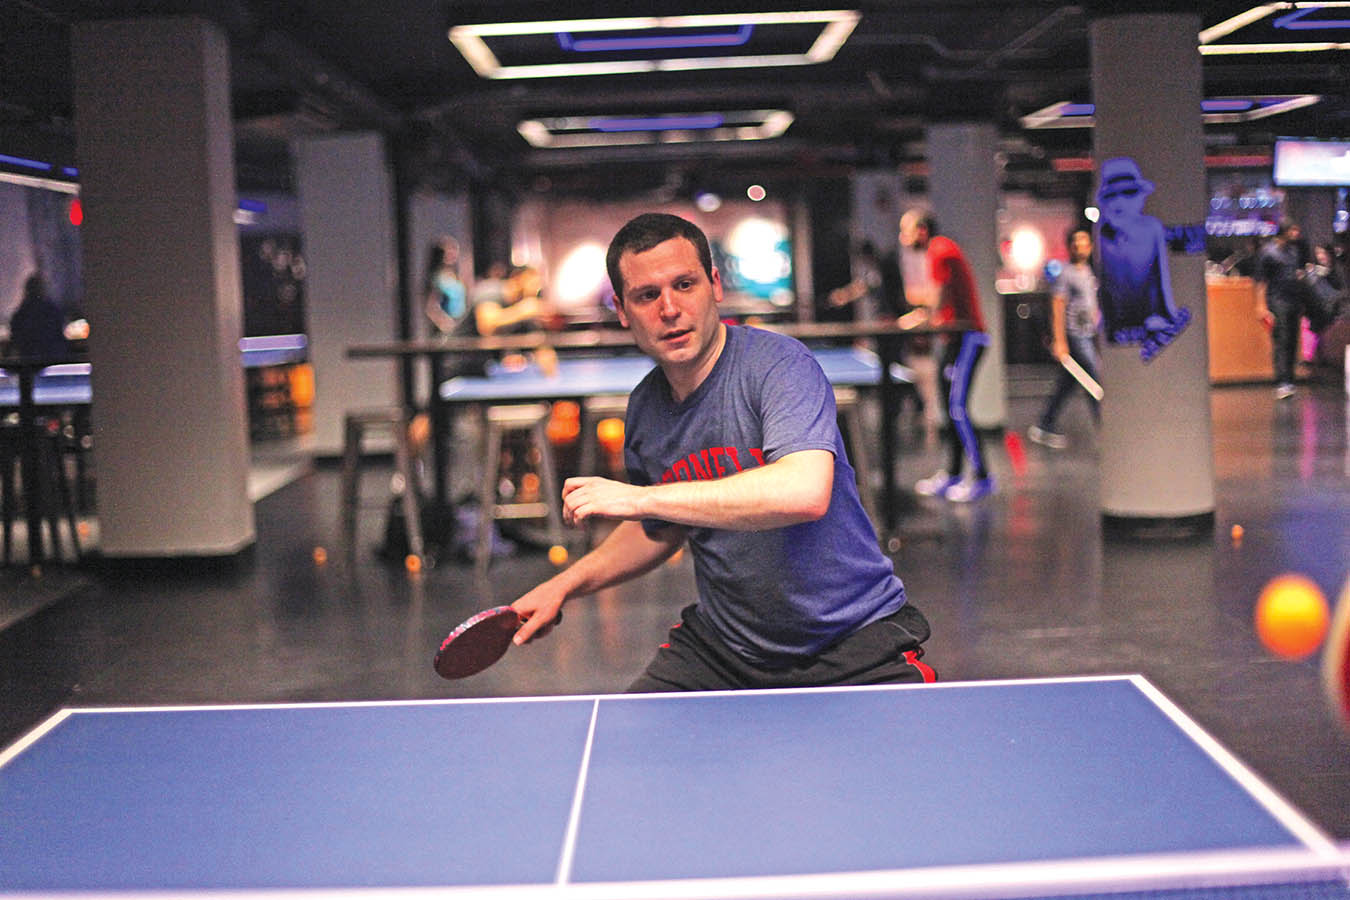 Dr. Matthew Simon practices at a table tennis club in Manhattan.